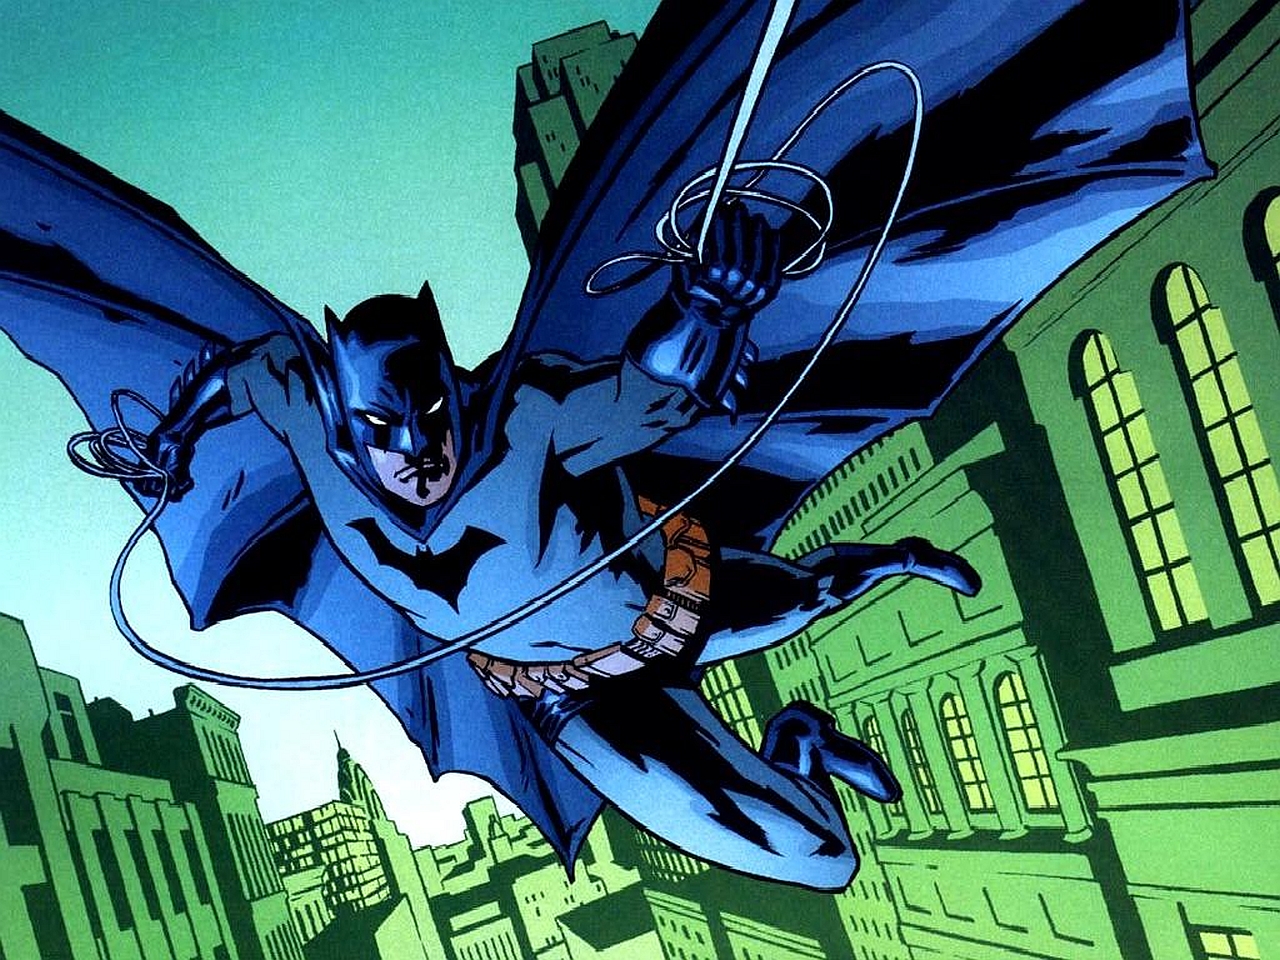 Скачать обои бесплатно Бэтмен, Комиксы картинка на рабочий стол ПК